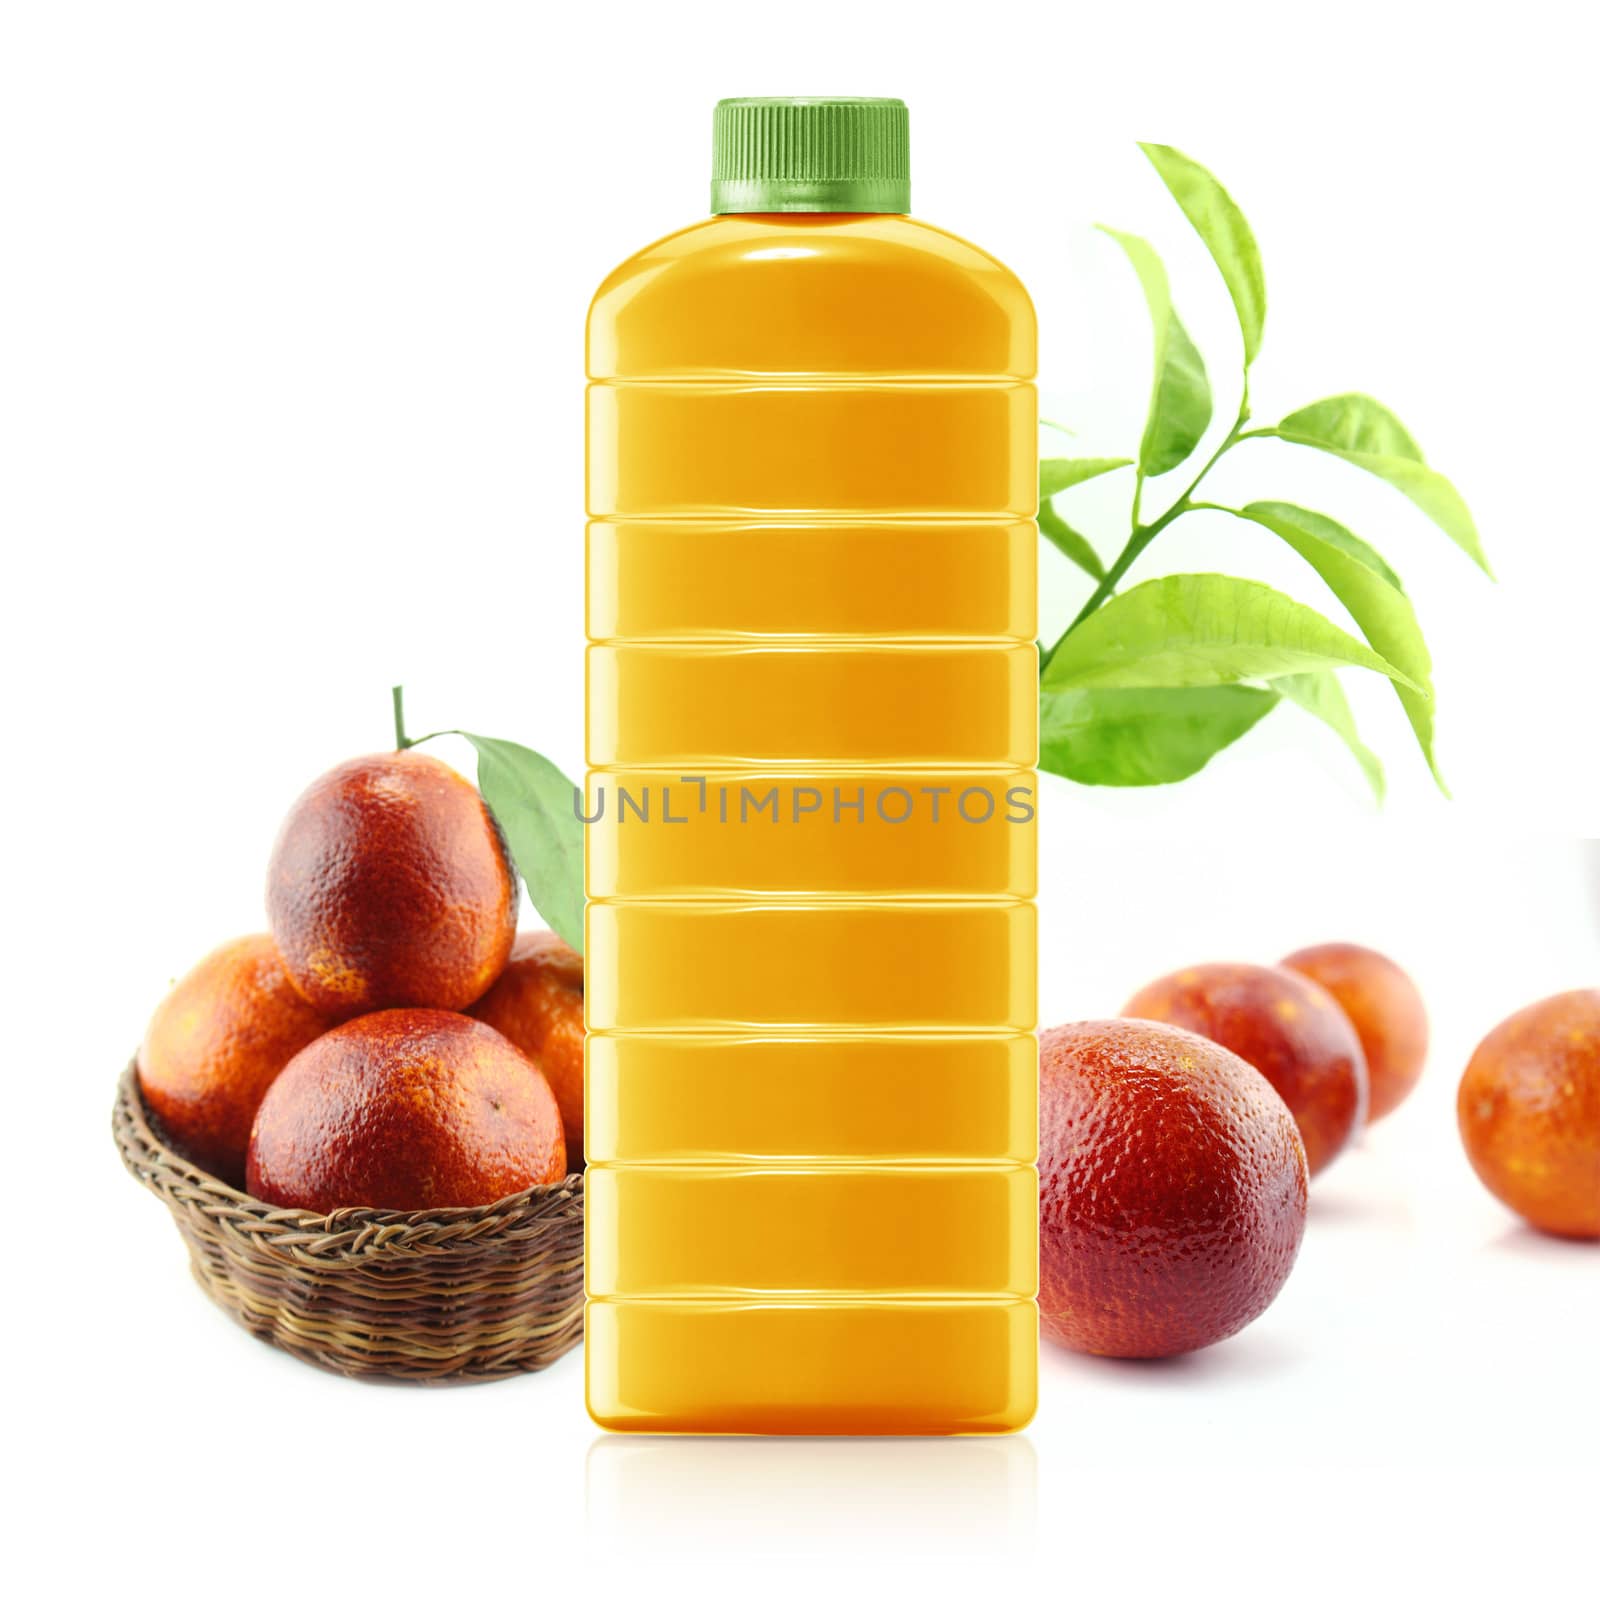 Red Orange juice by designsstock